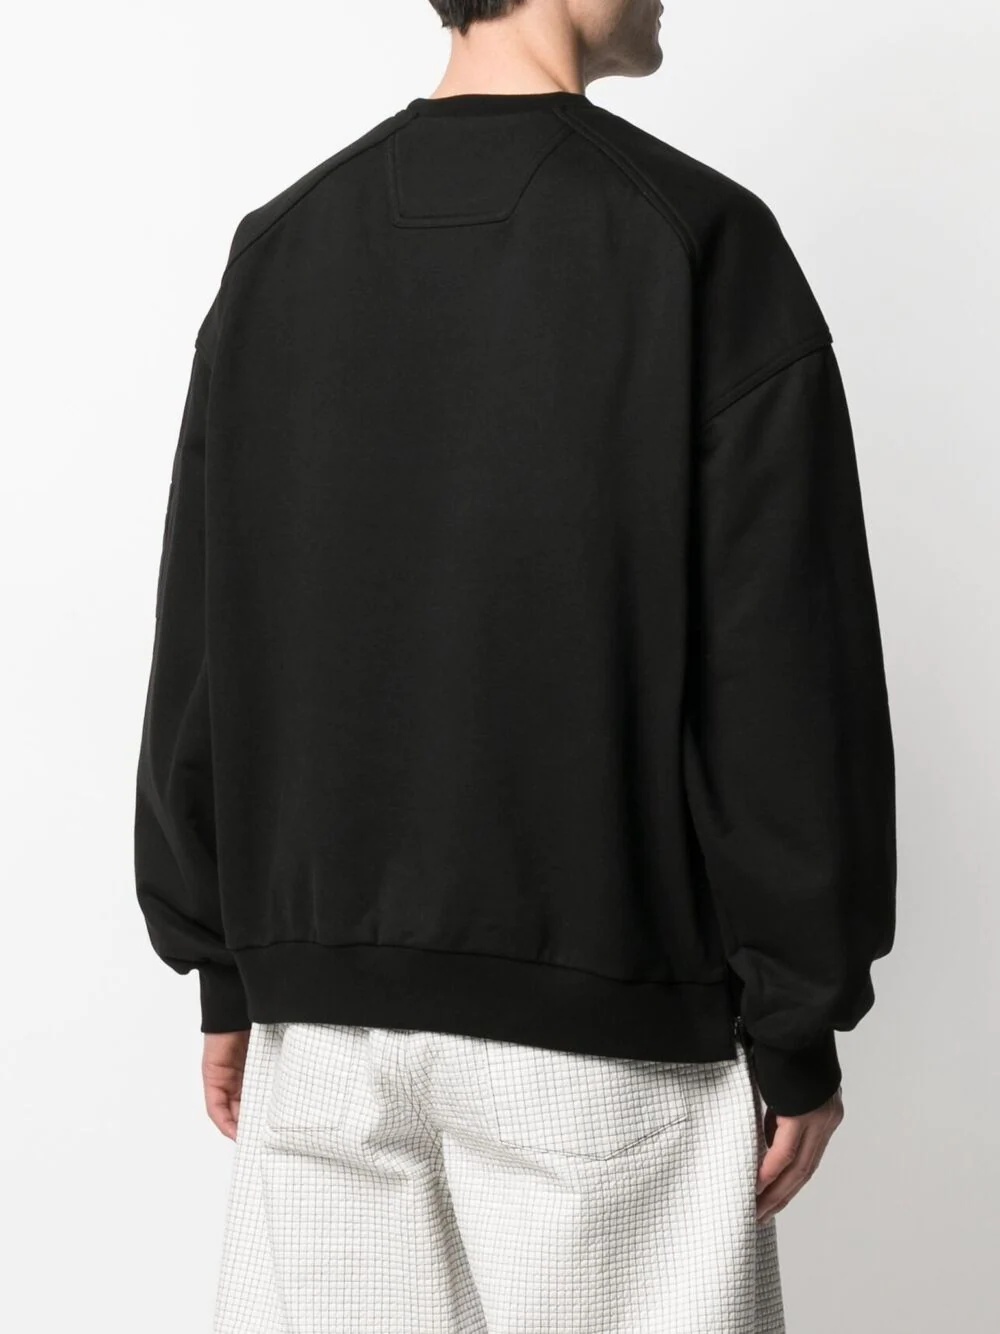 arm-pocket sweatshirt - 4